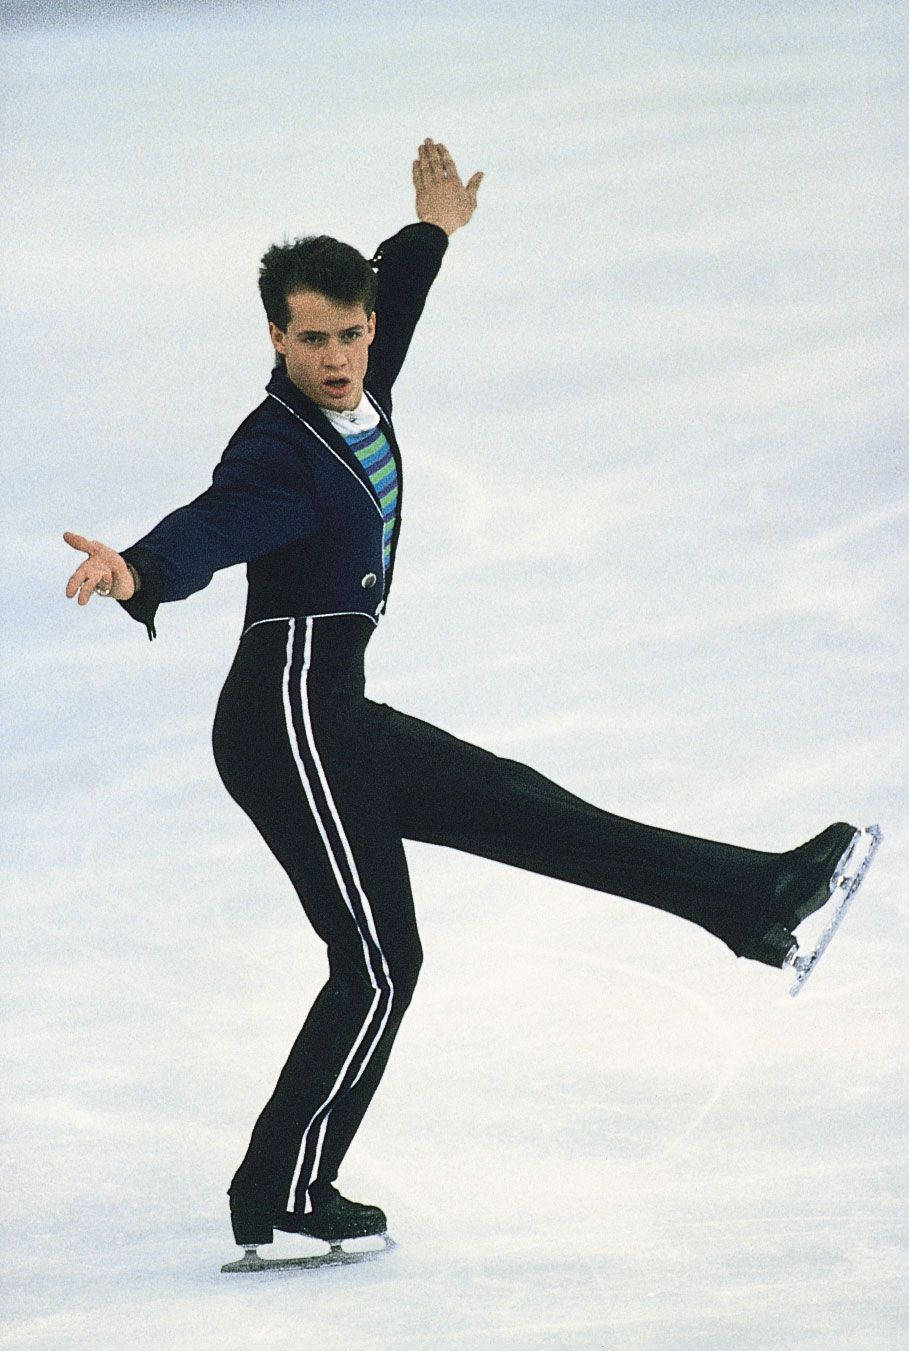 Canadian Figure Skating Athlete Kurt Browning Wallpaper